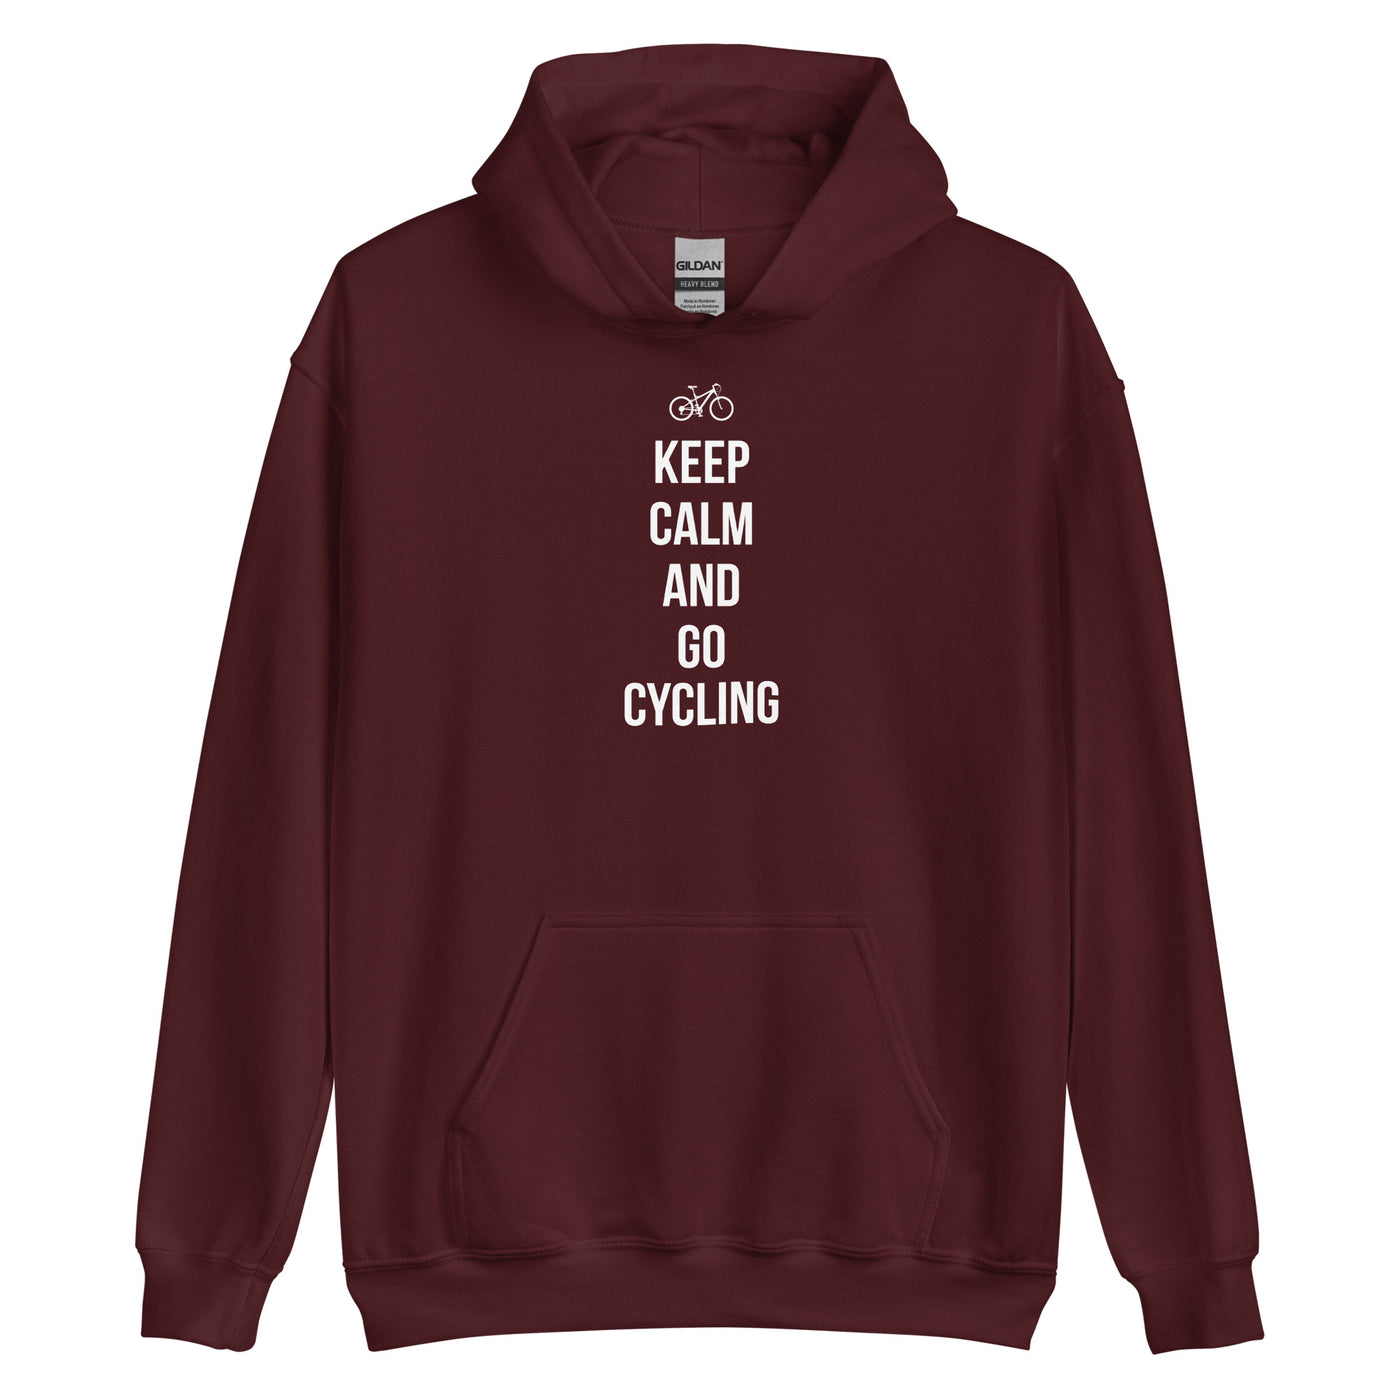 Keep calm and go cycling - Unisex Hoodie fahrrad xxx yyy zzz Maroon